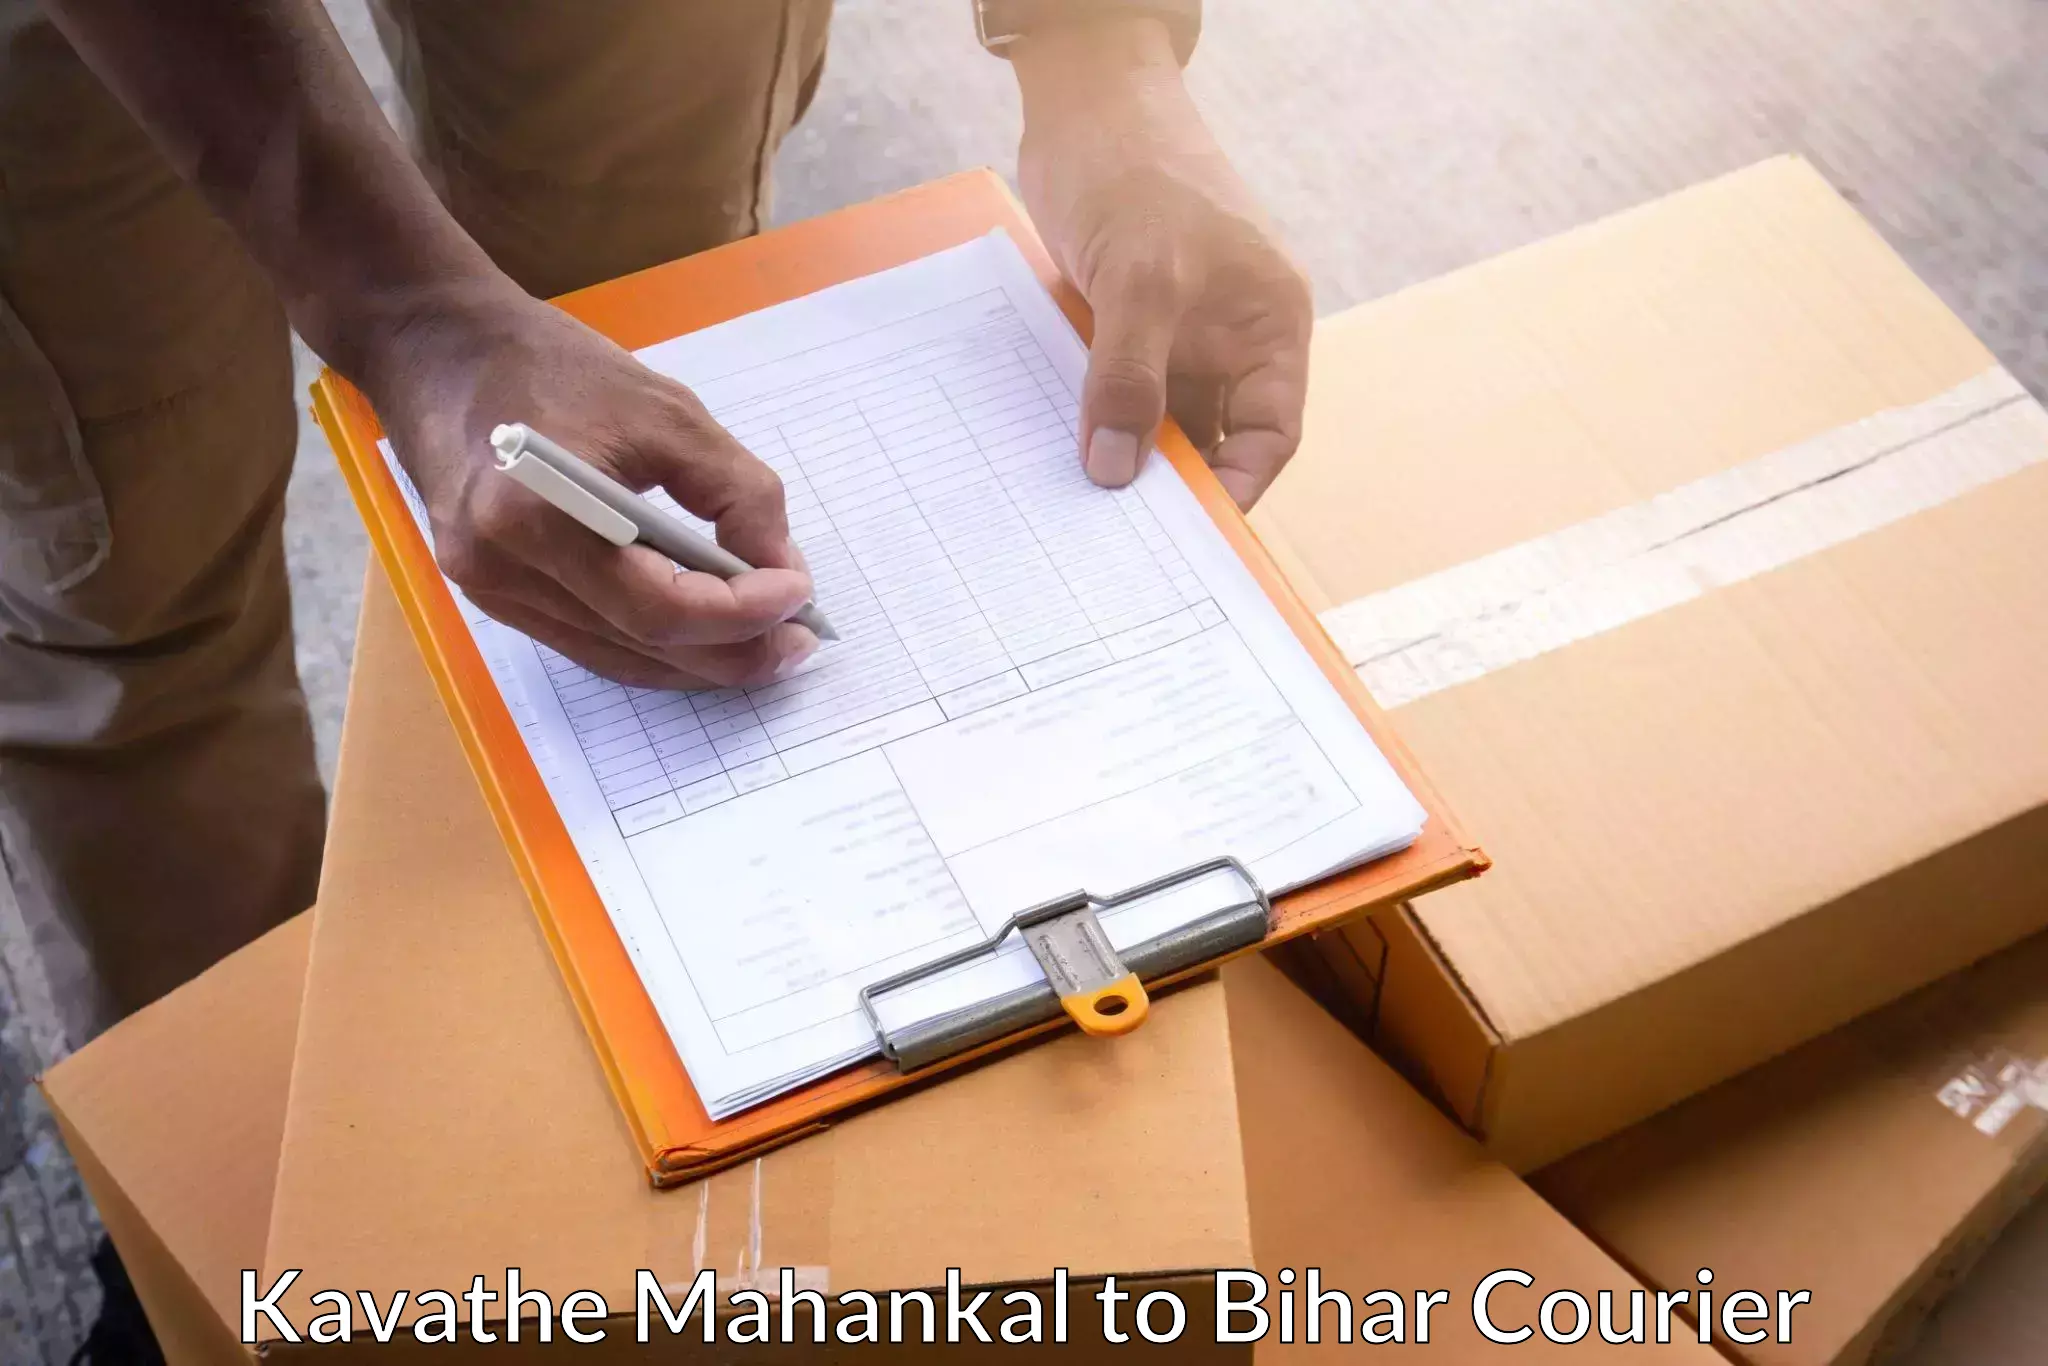 Online package tracking Kavathe Mahankal to Sirdala